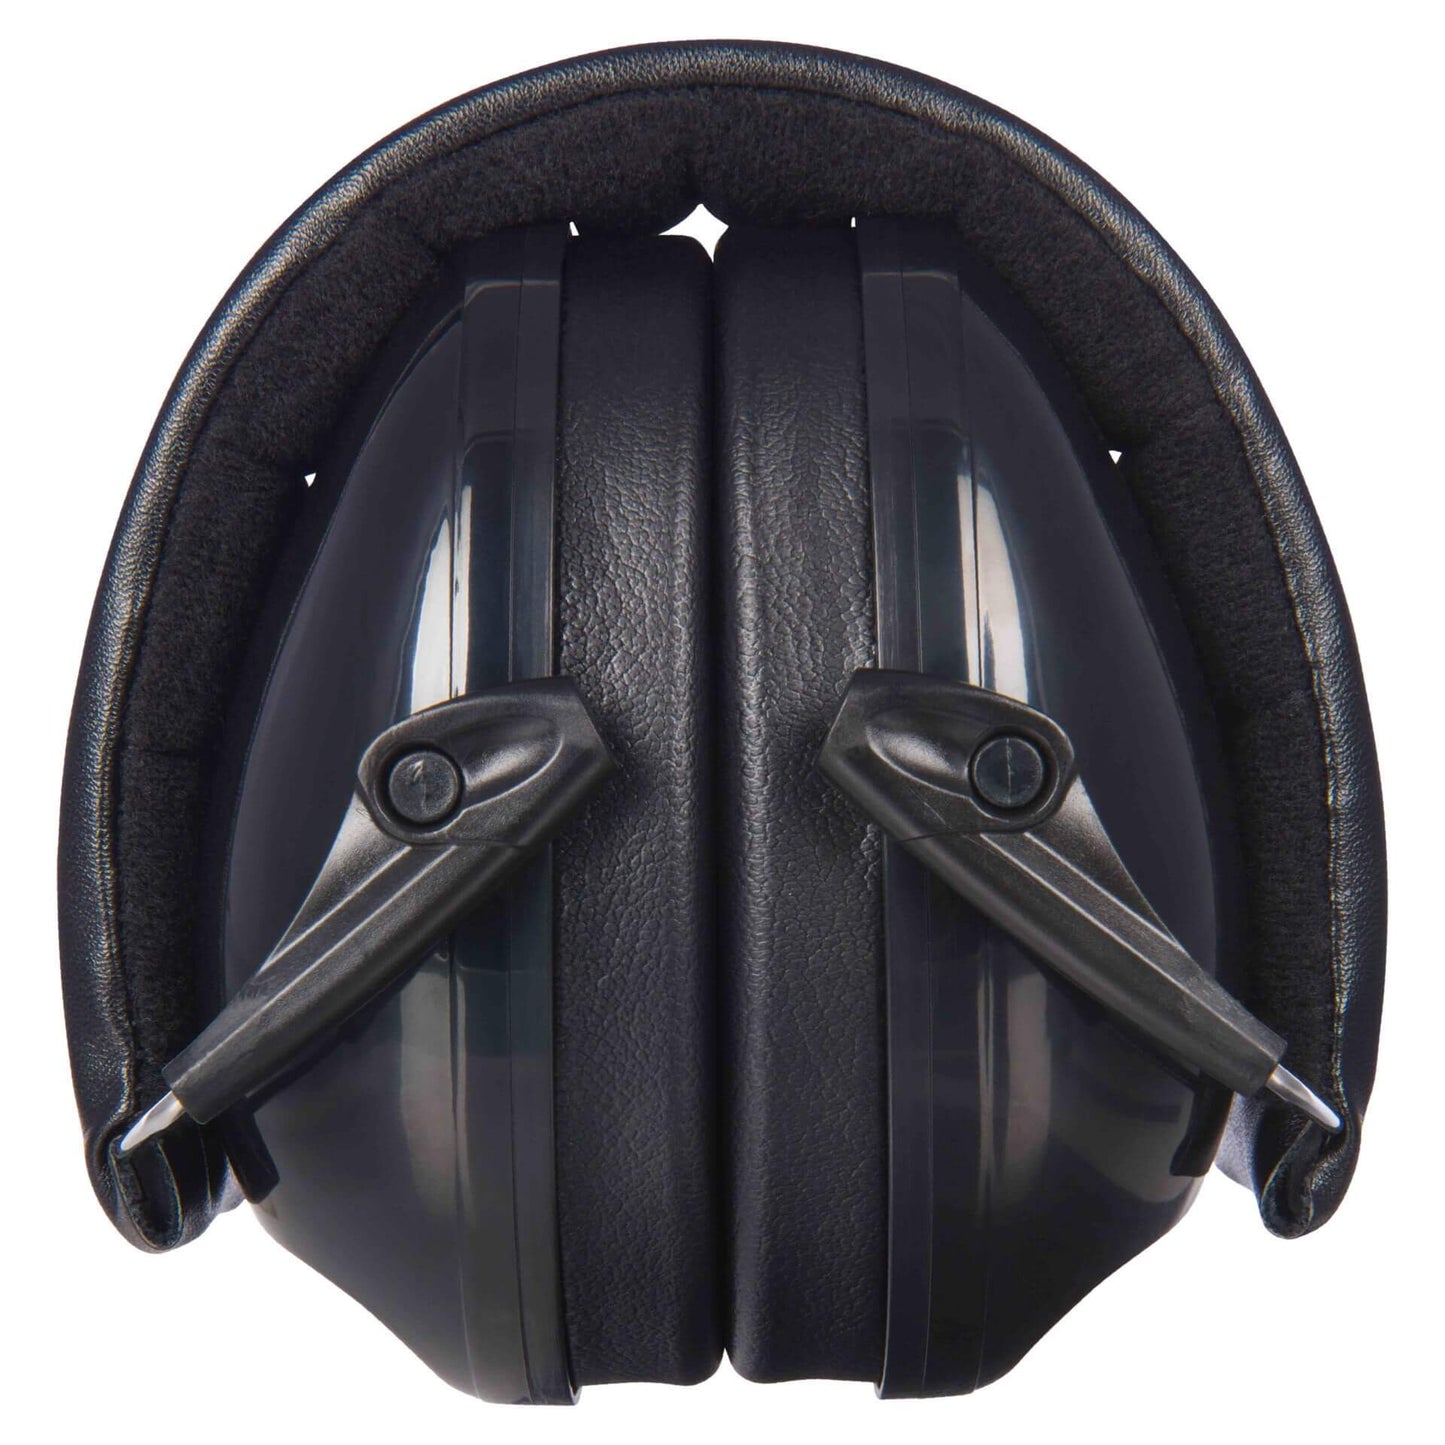 Dooky Junior Ear Protection (Black)